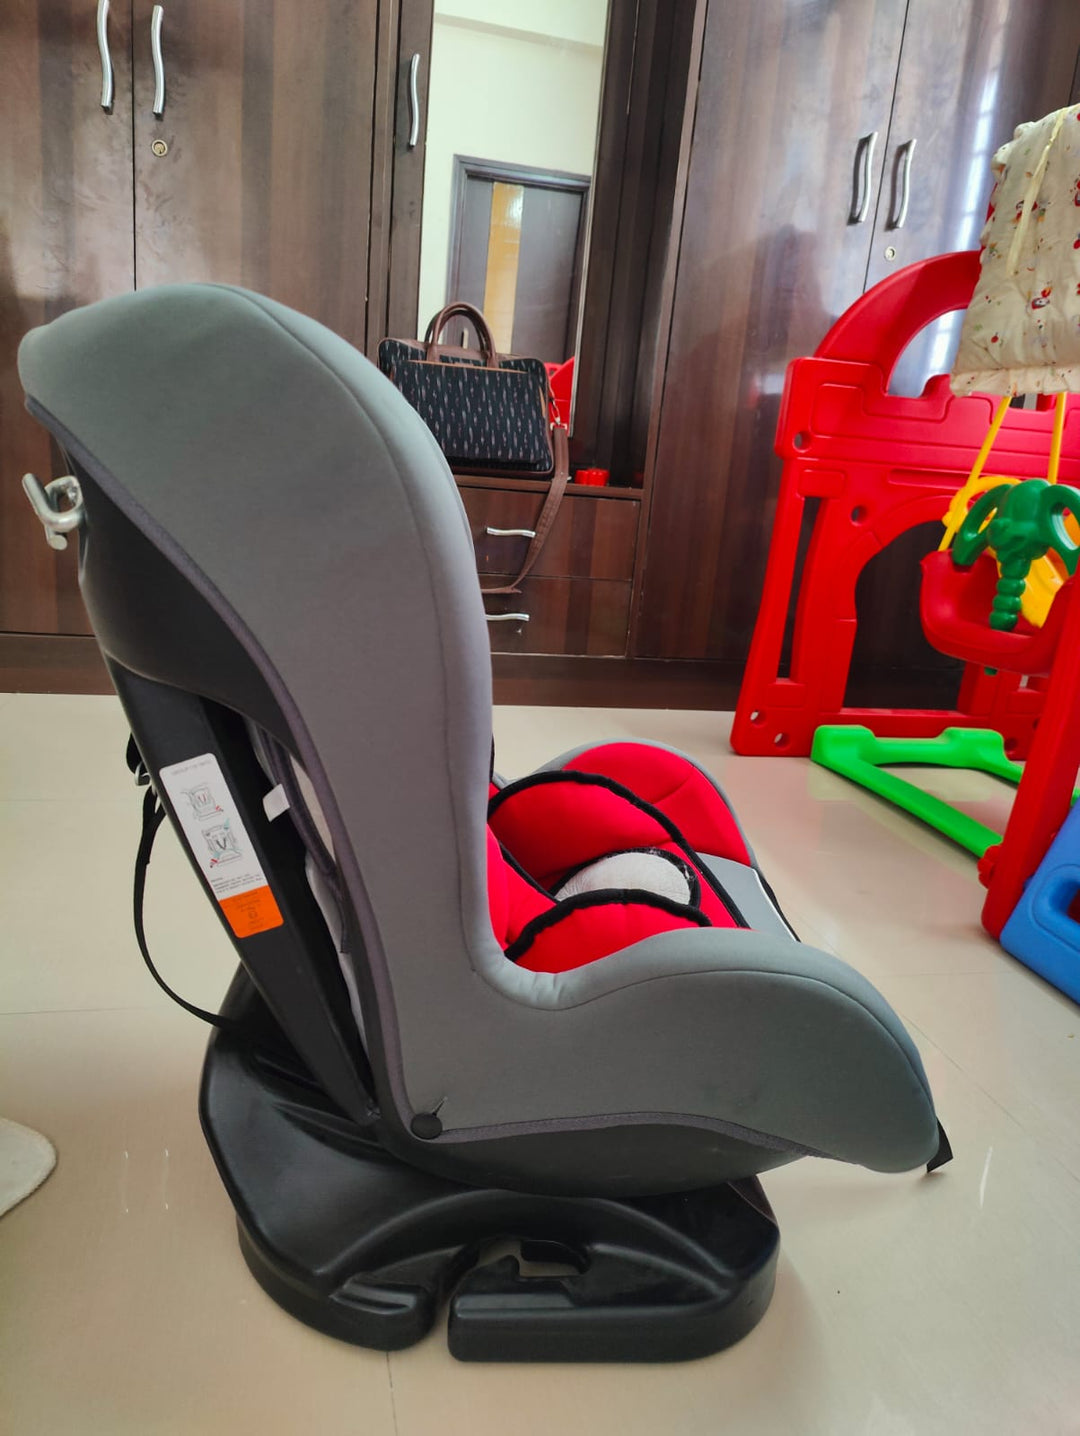 Babyhug Cruise Convertible Reclining Car Seat